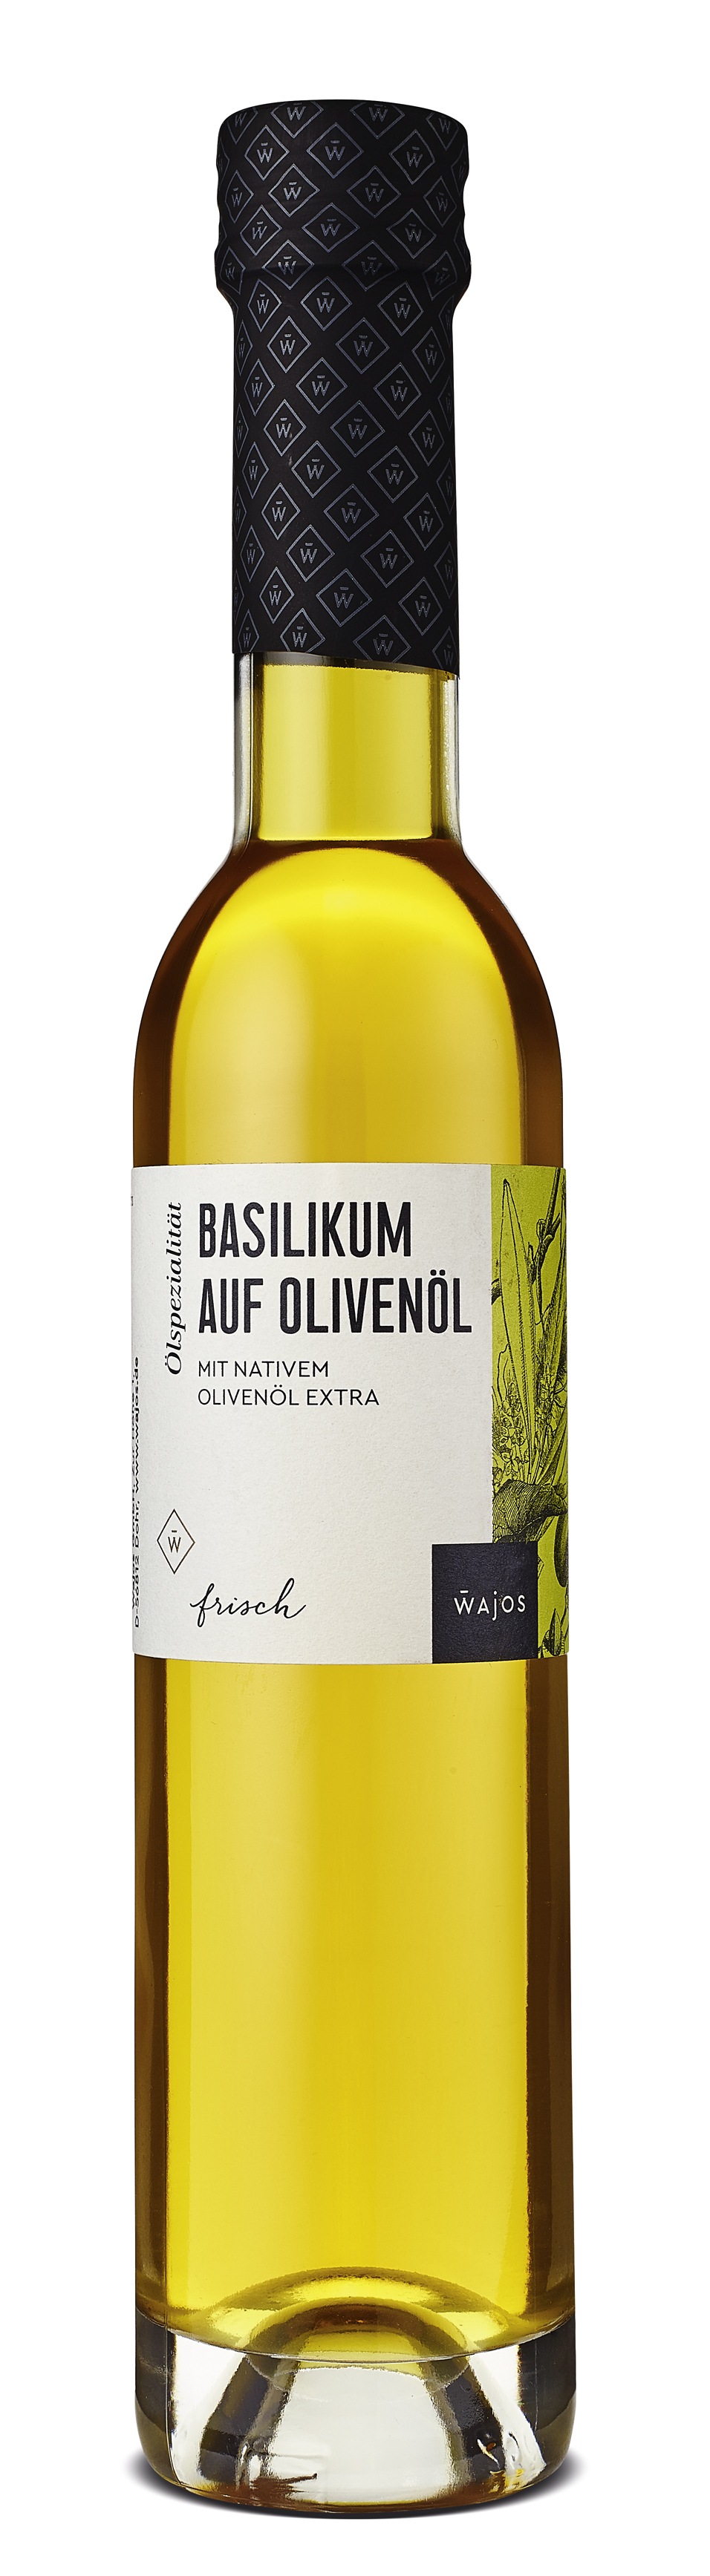 Basilikum auf Olivenöl 250ml - Olivenölzubereitung